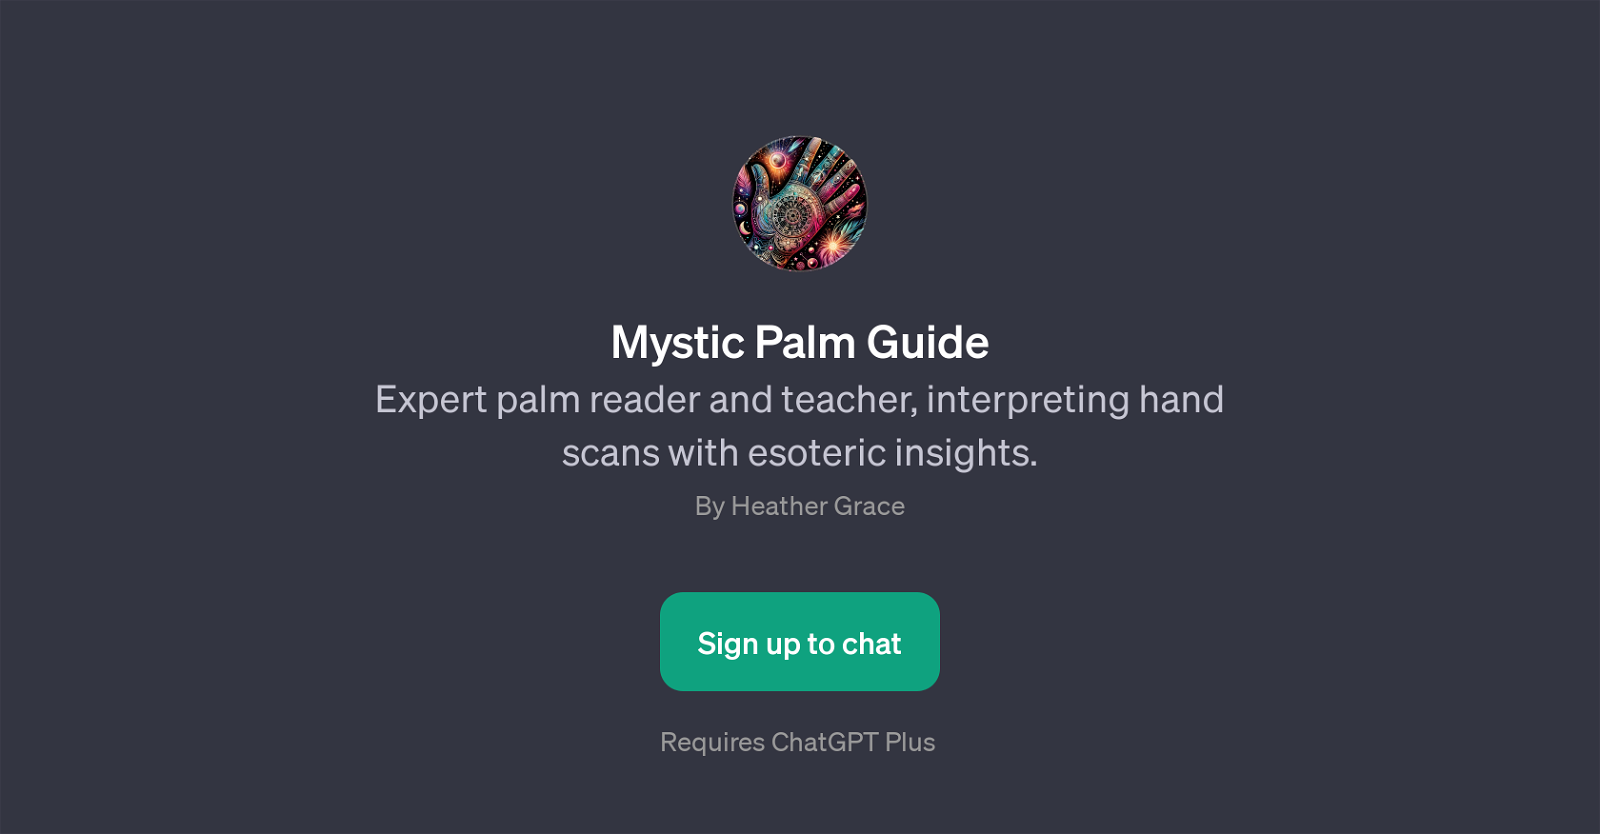 Mystic Palm Guide website